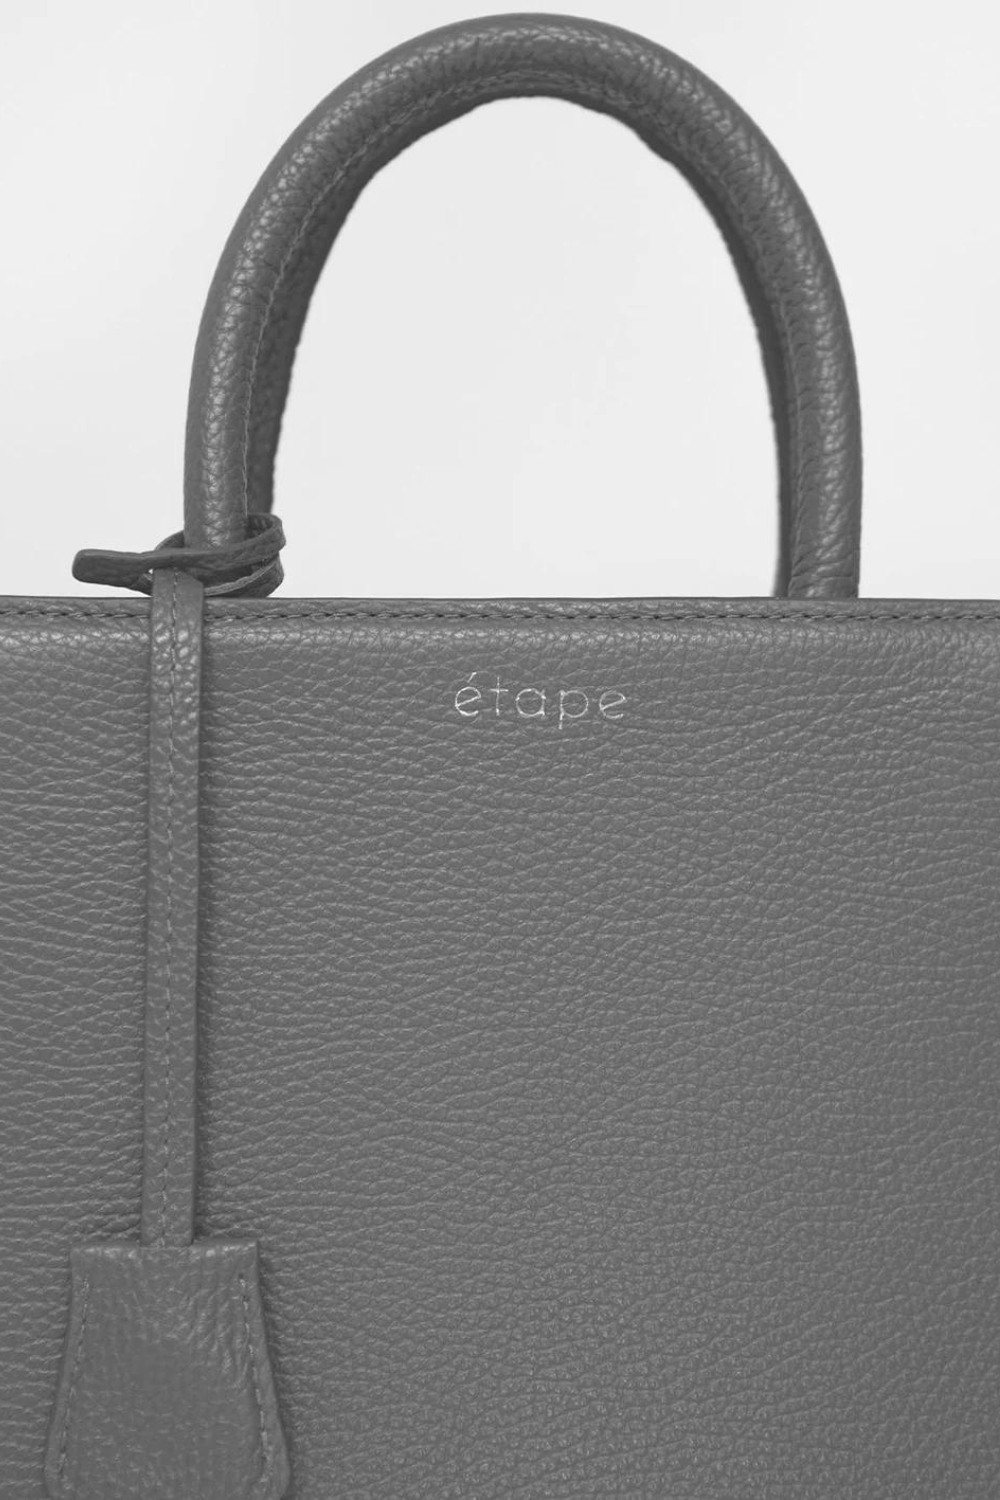 Dámská kabelka Tmavě šedá (ETAPE) TOY BAG 888 deep grey